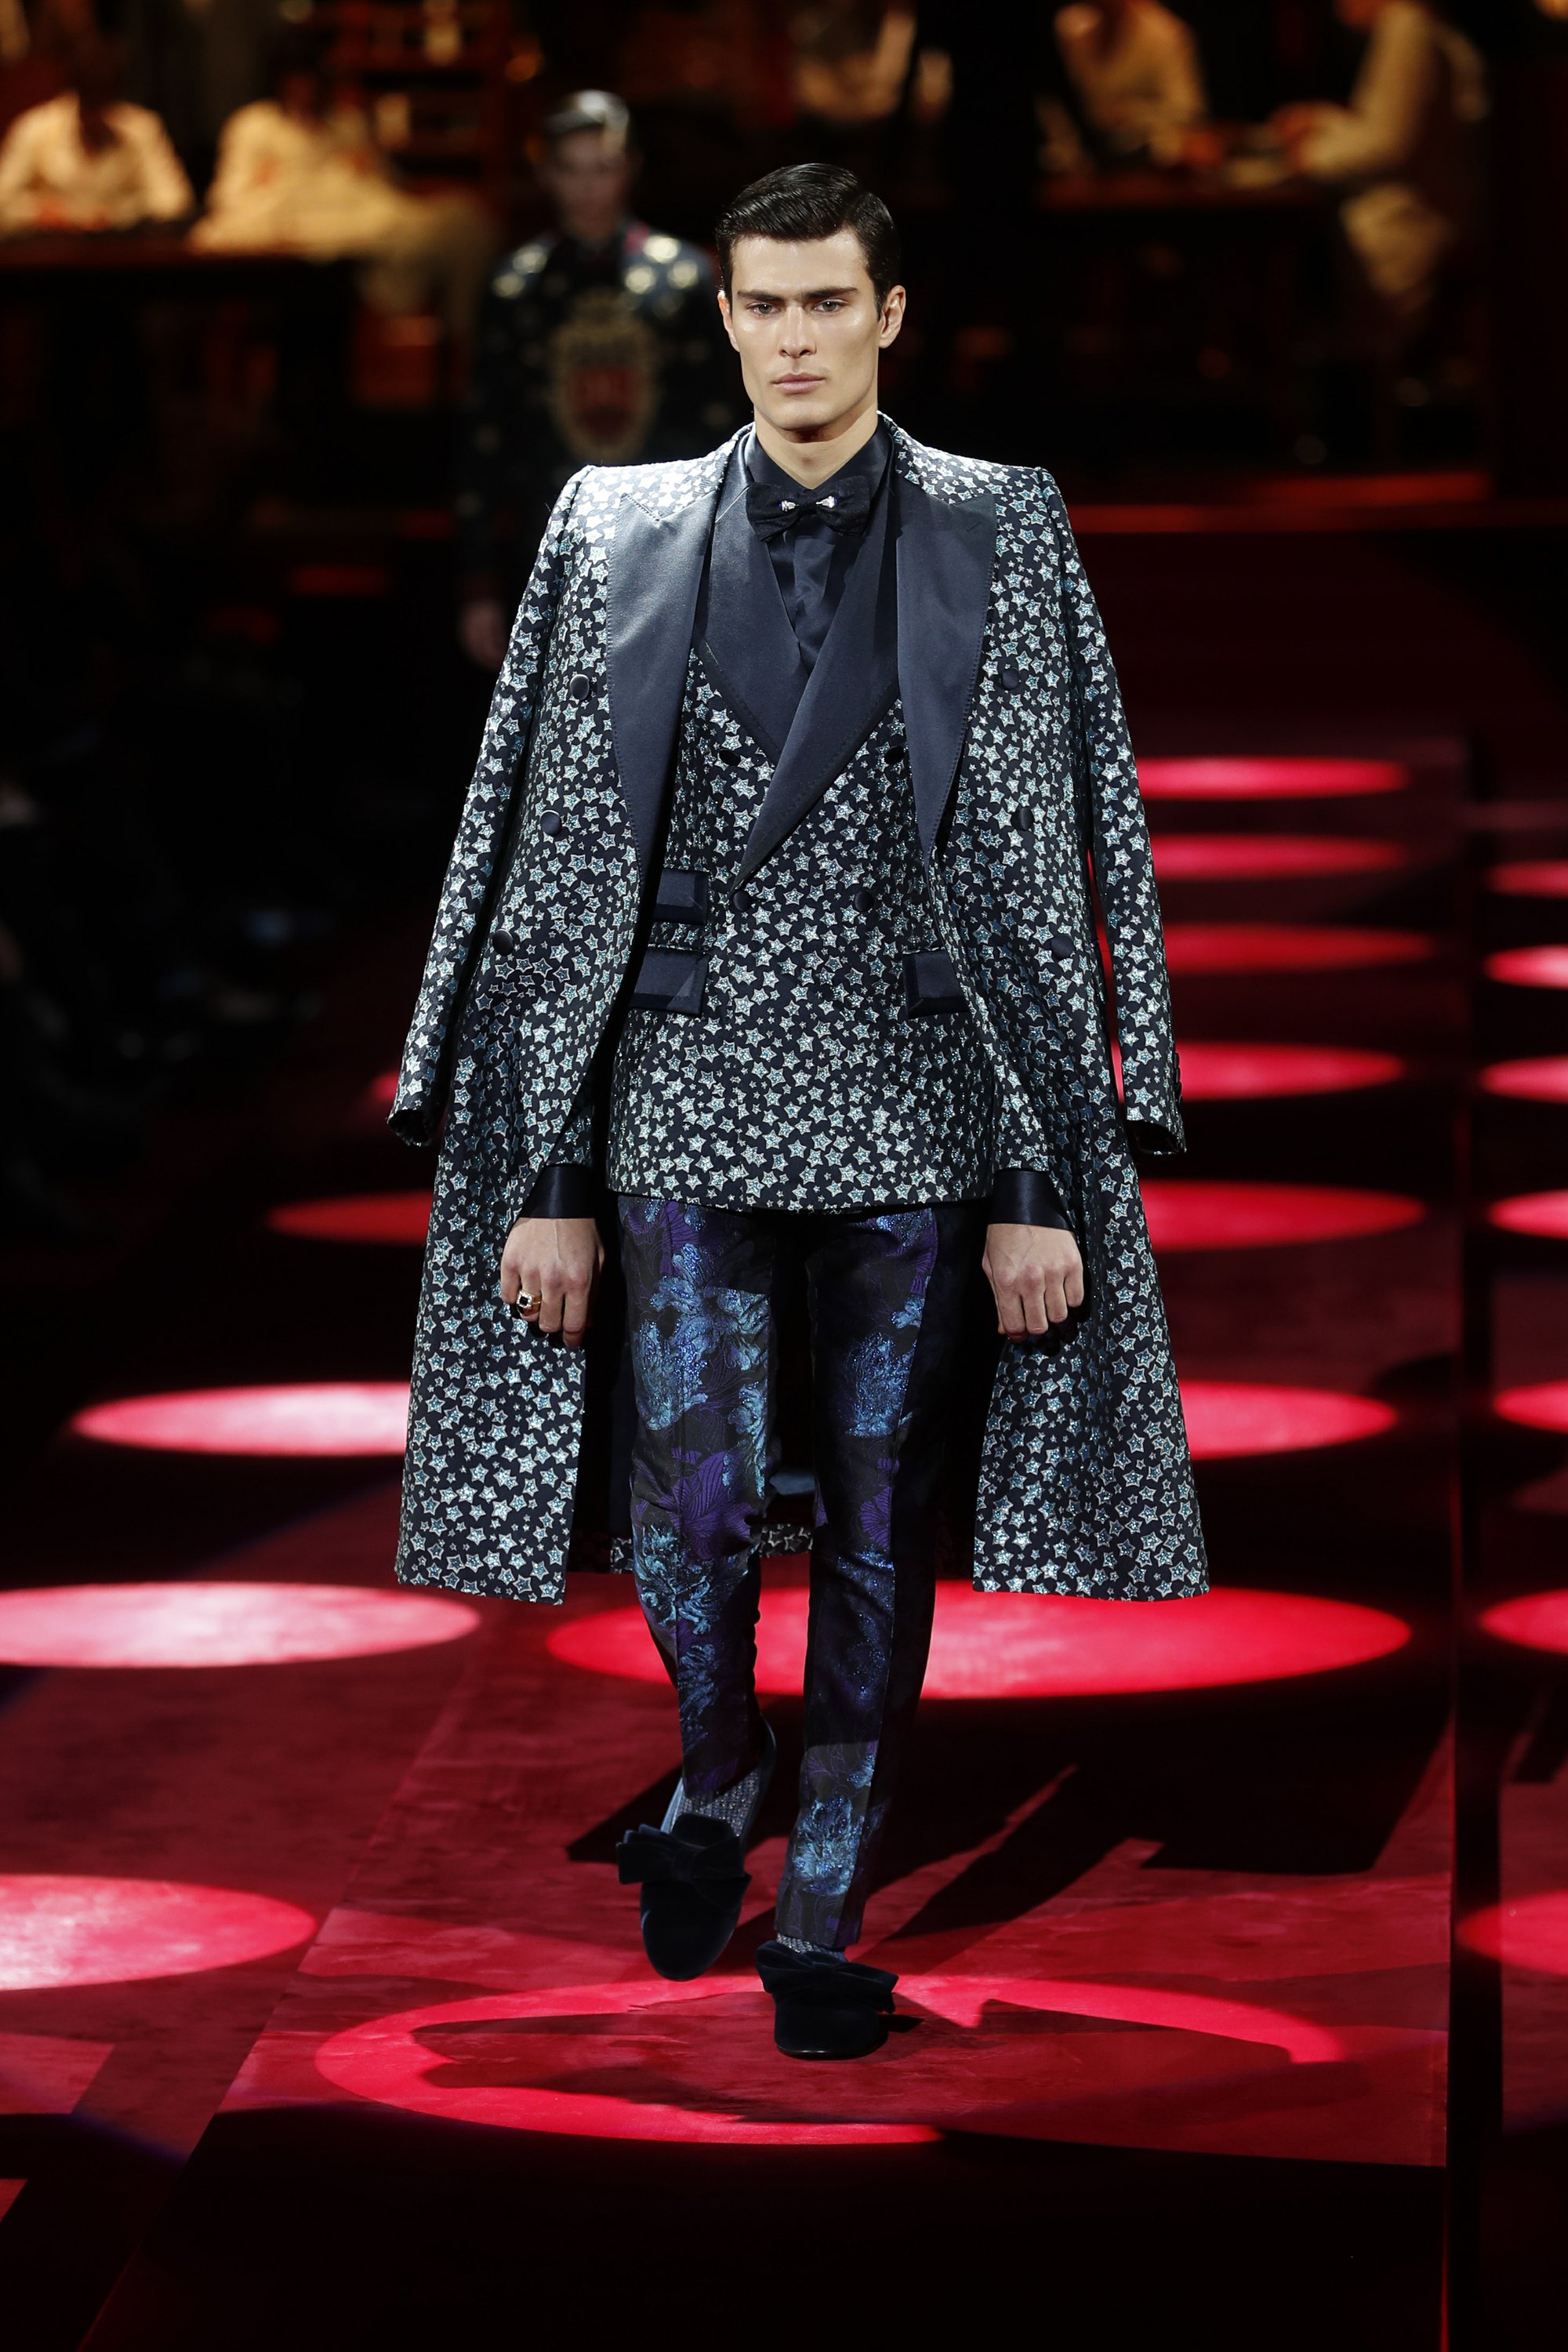 Versace offers daring masculinity; Dolce&Gabbana go elegant | AP News